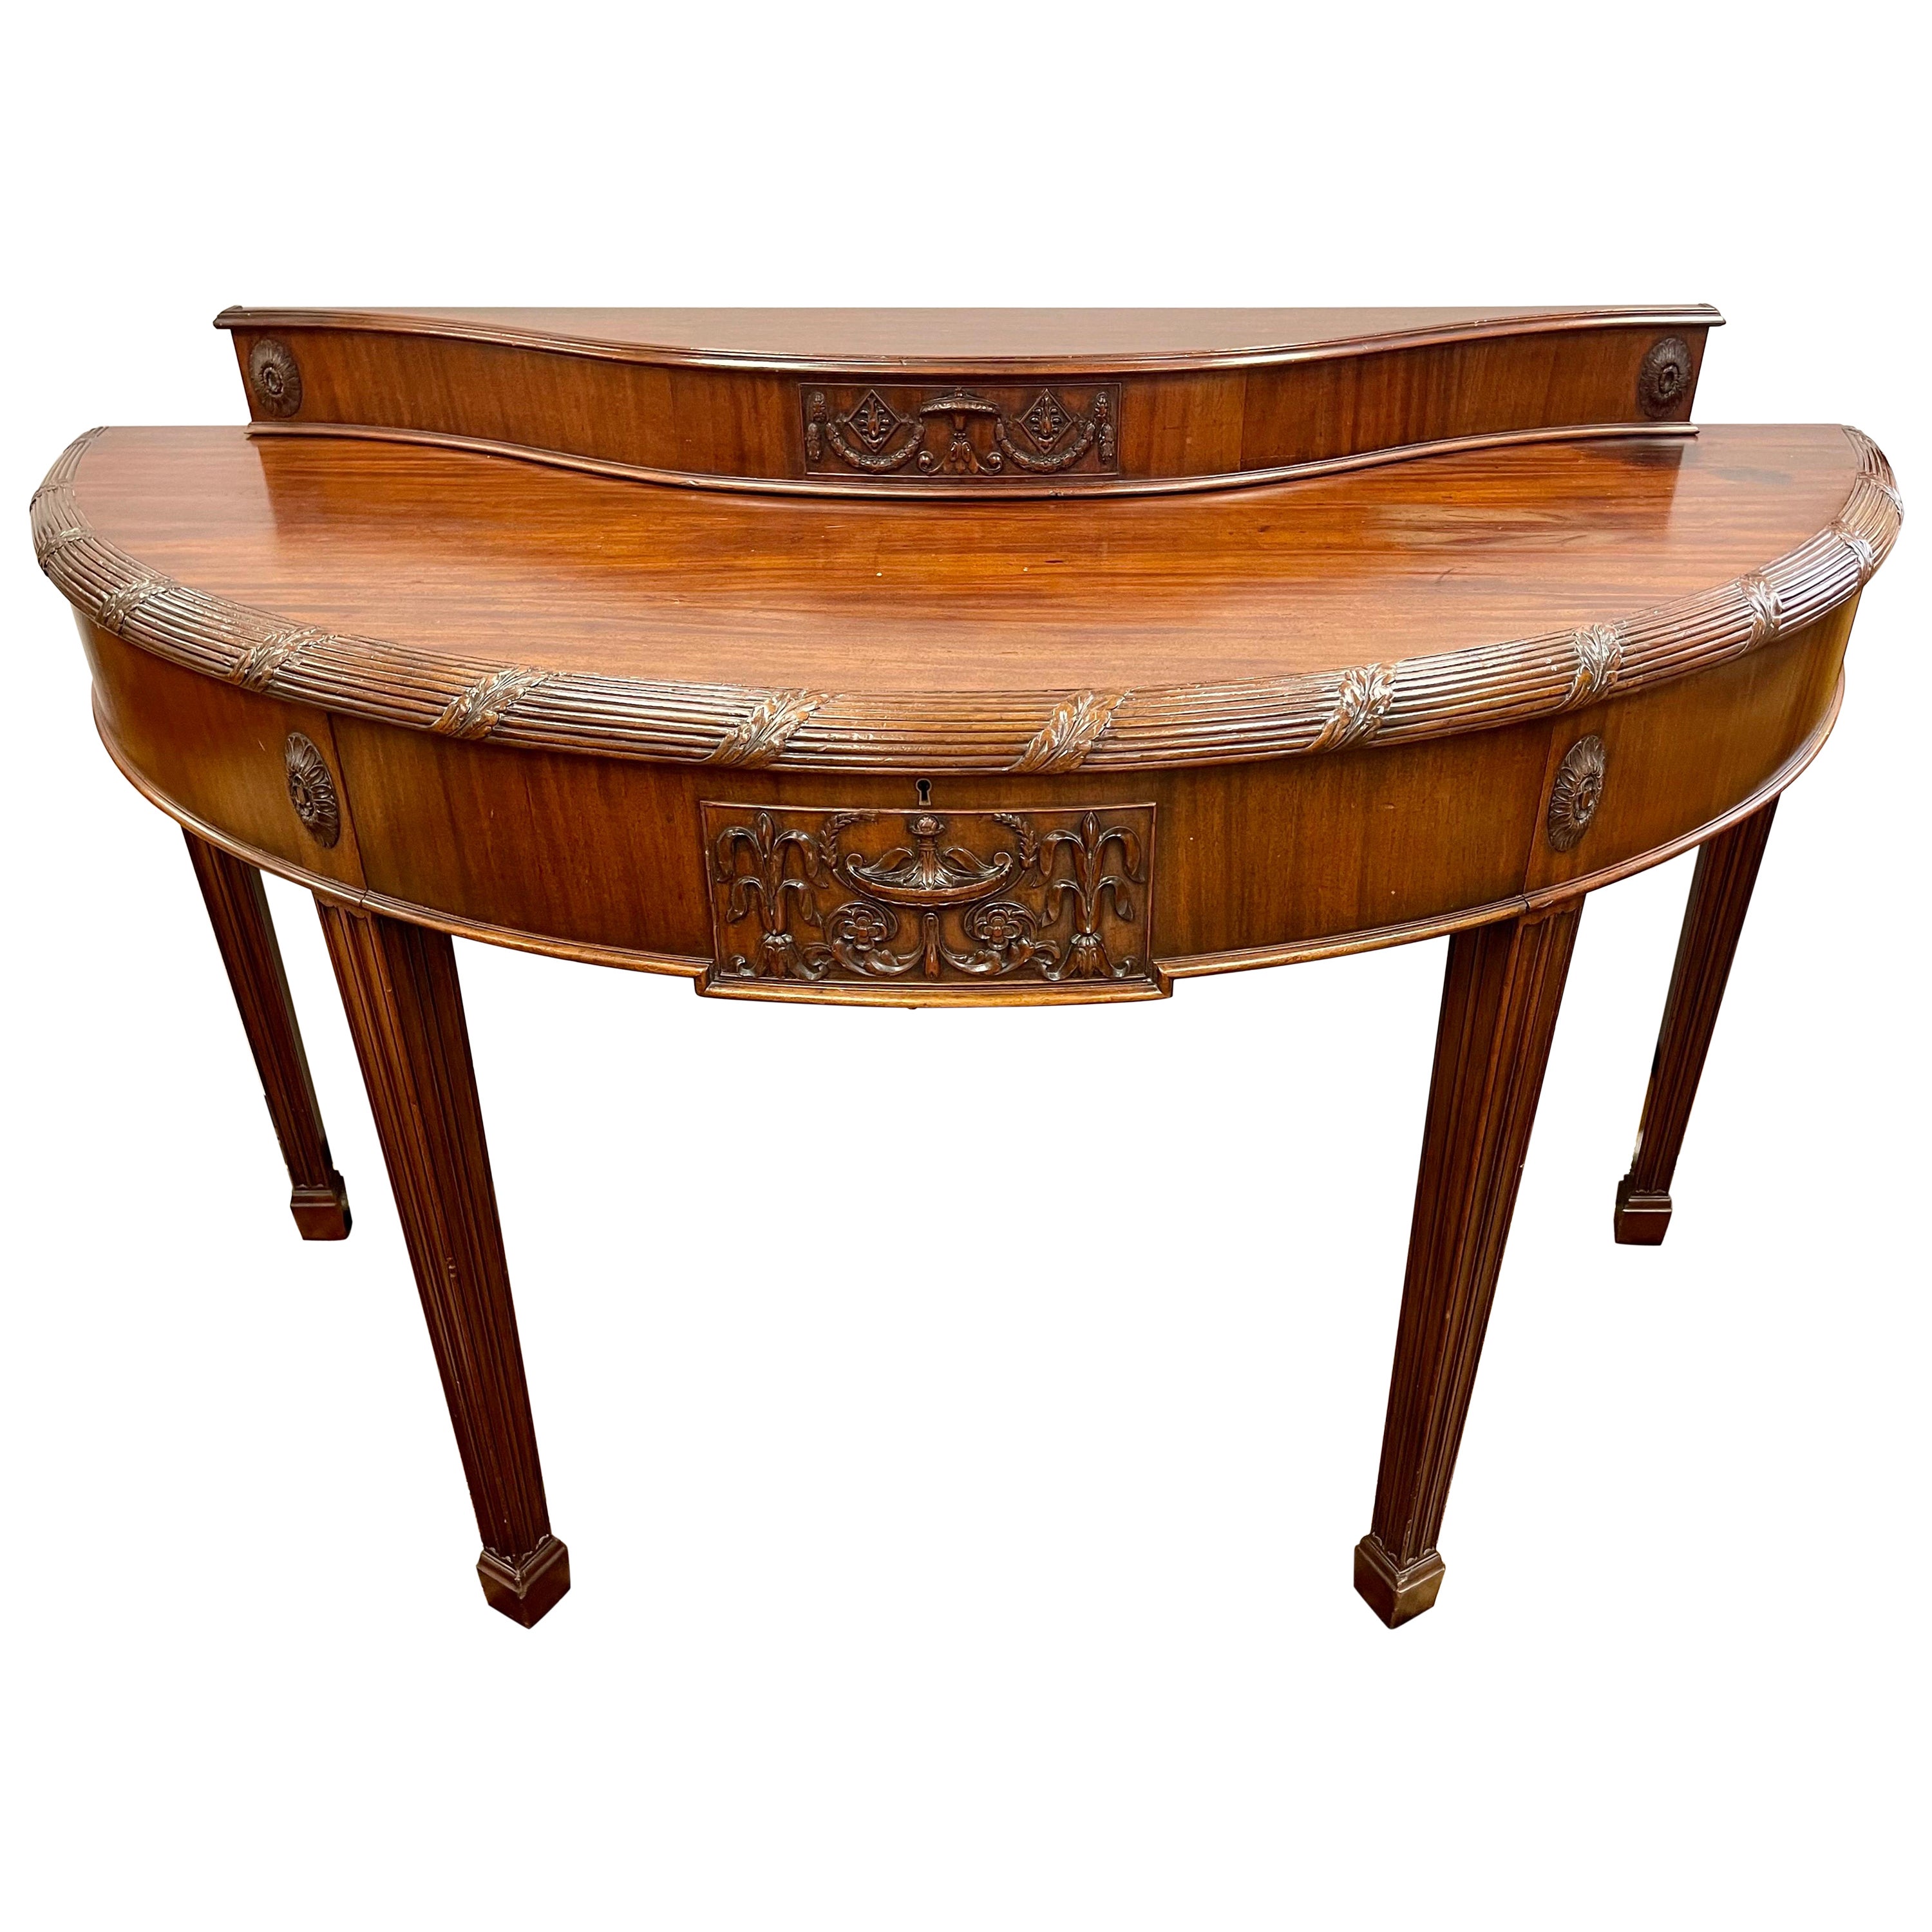 Extra Large English Vintage English Hepplewhite Style Demilune Table For Sale